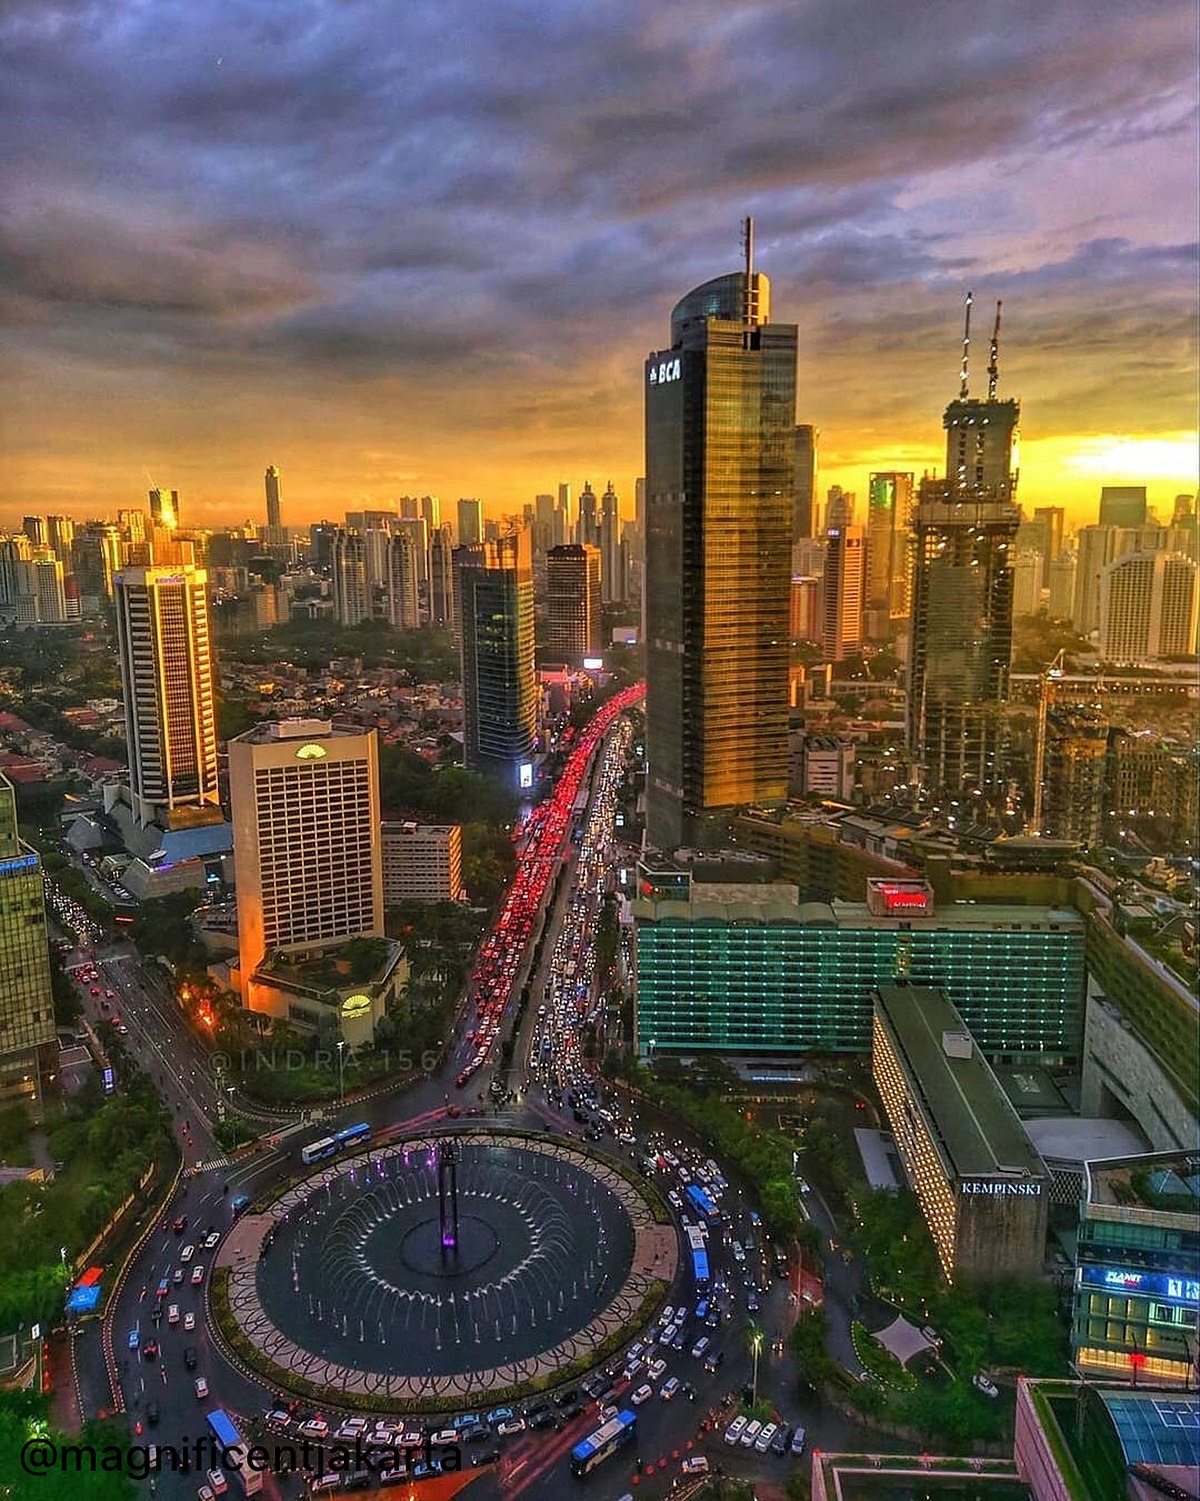 Economy Of Indonesia Wikipedia